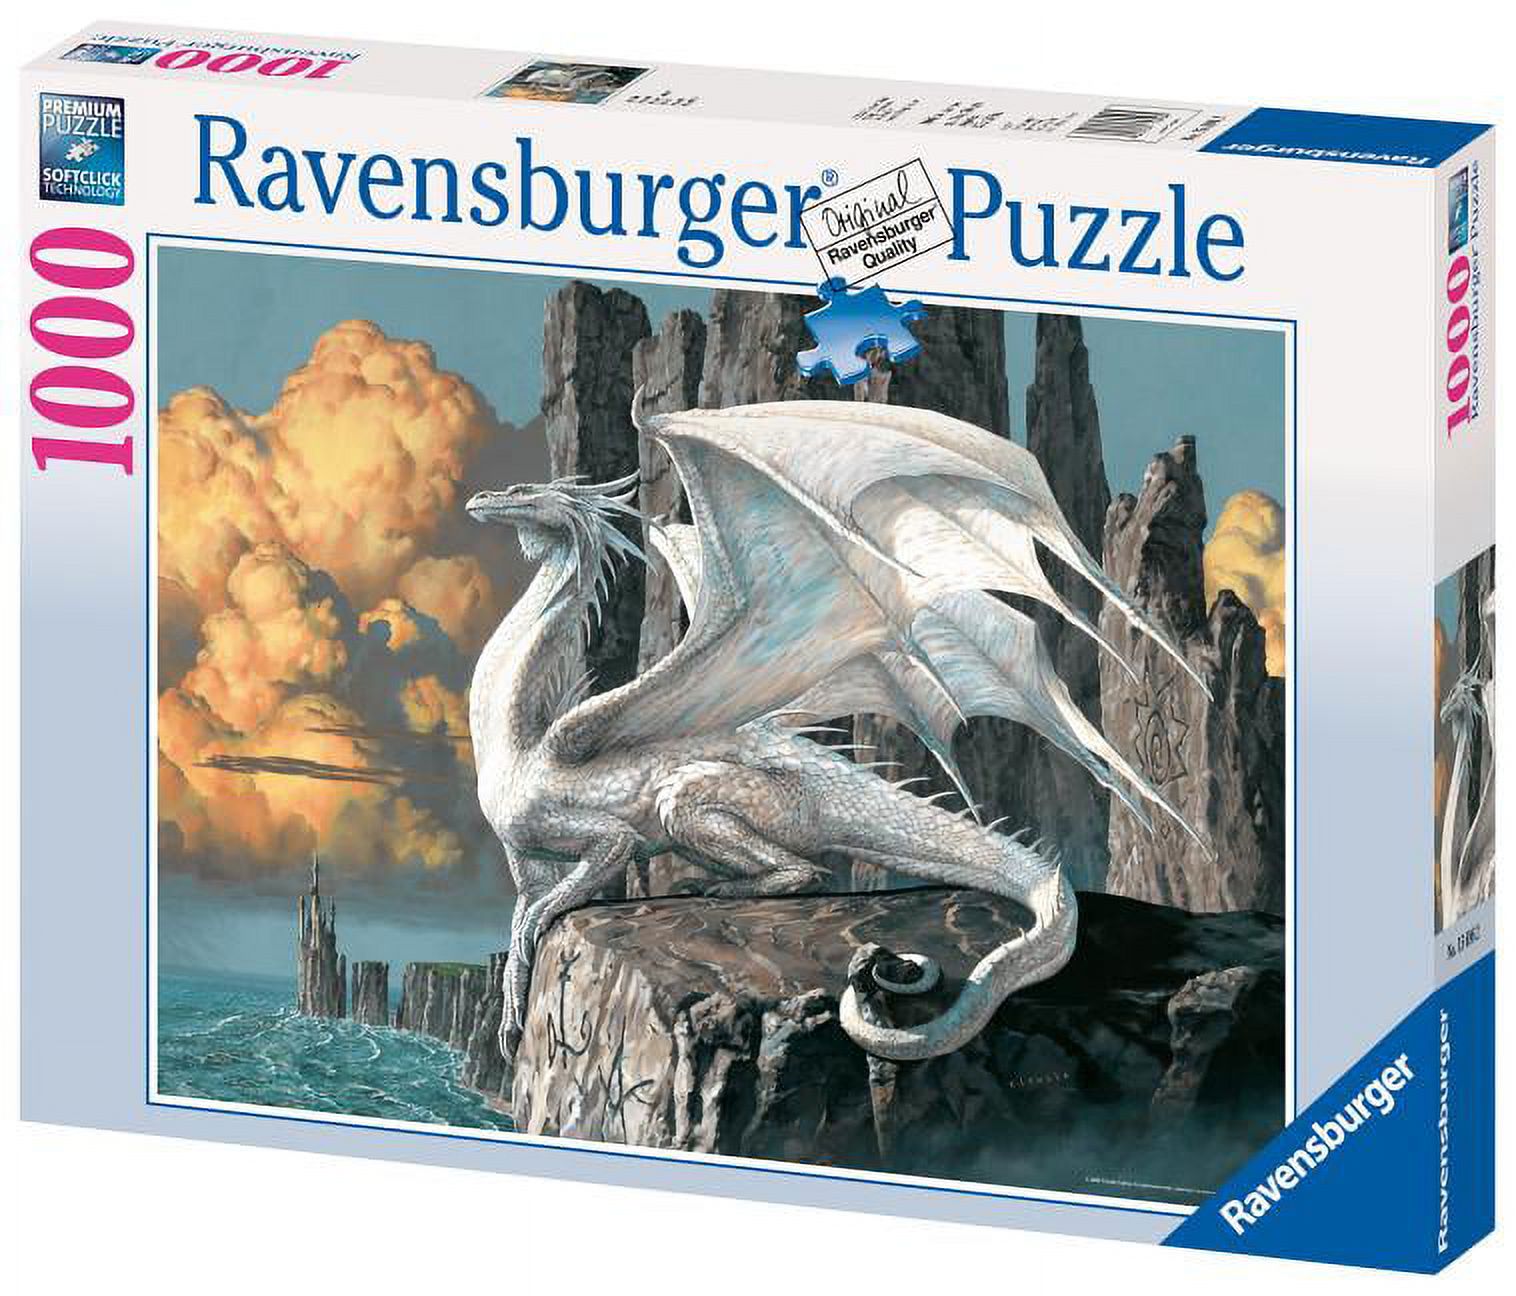 Ravensburger - Dragon - 1000 Piece Jigsaw Puzzle - image 1 of 2